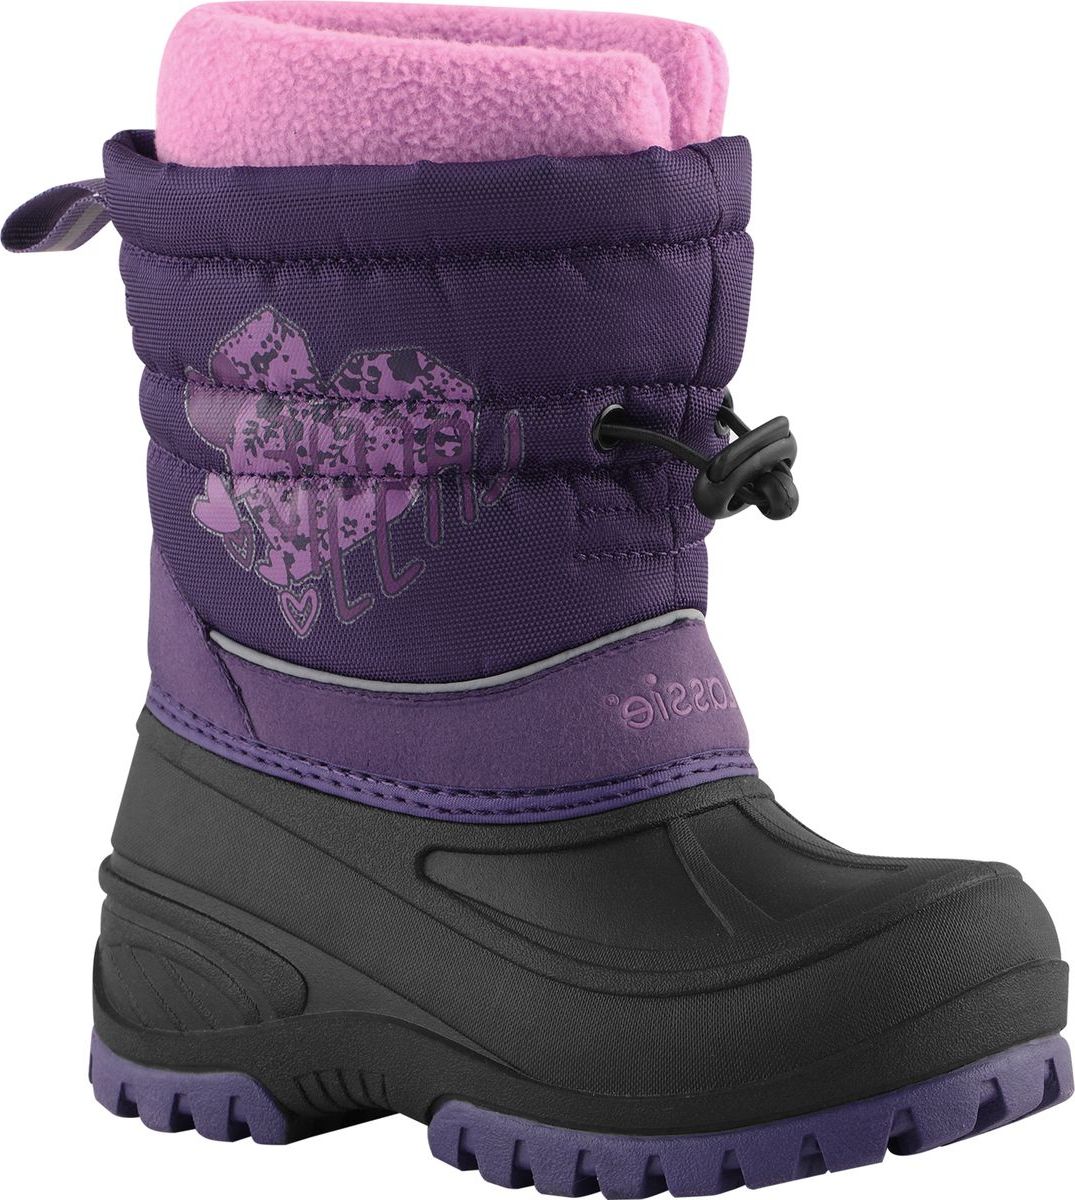 Ботинки детские Lassie Coldwell, цвет: пурпурный. 7691215950. Размер 30